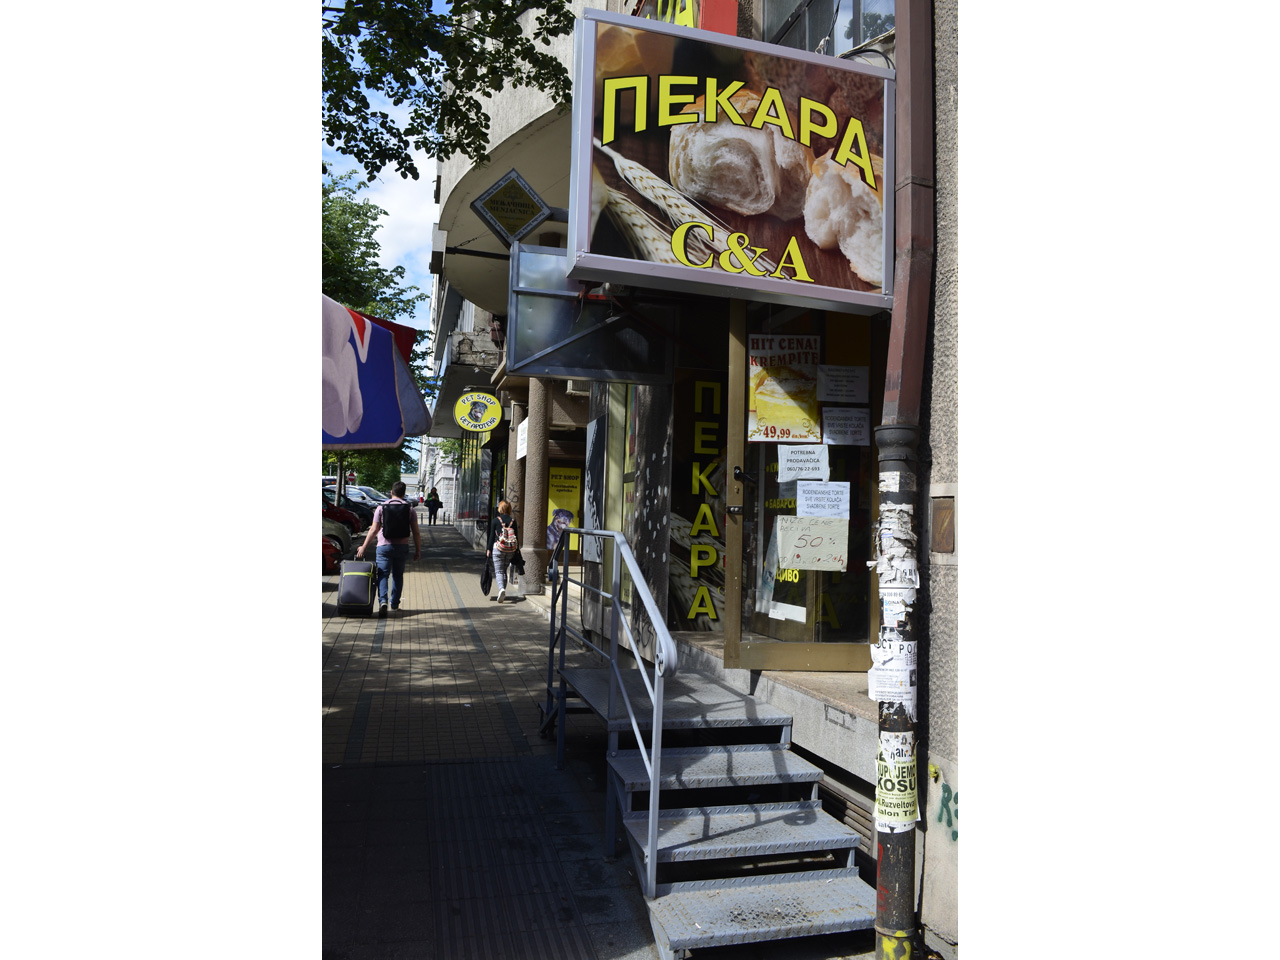 PEKARA S&A Ketering Beograd